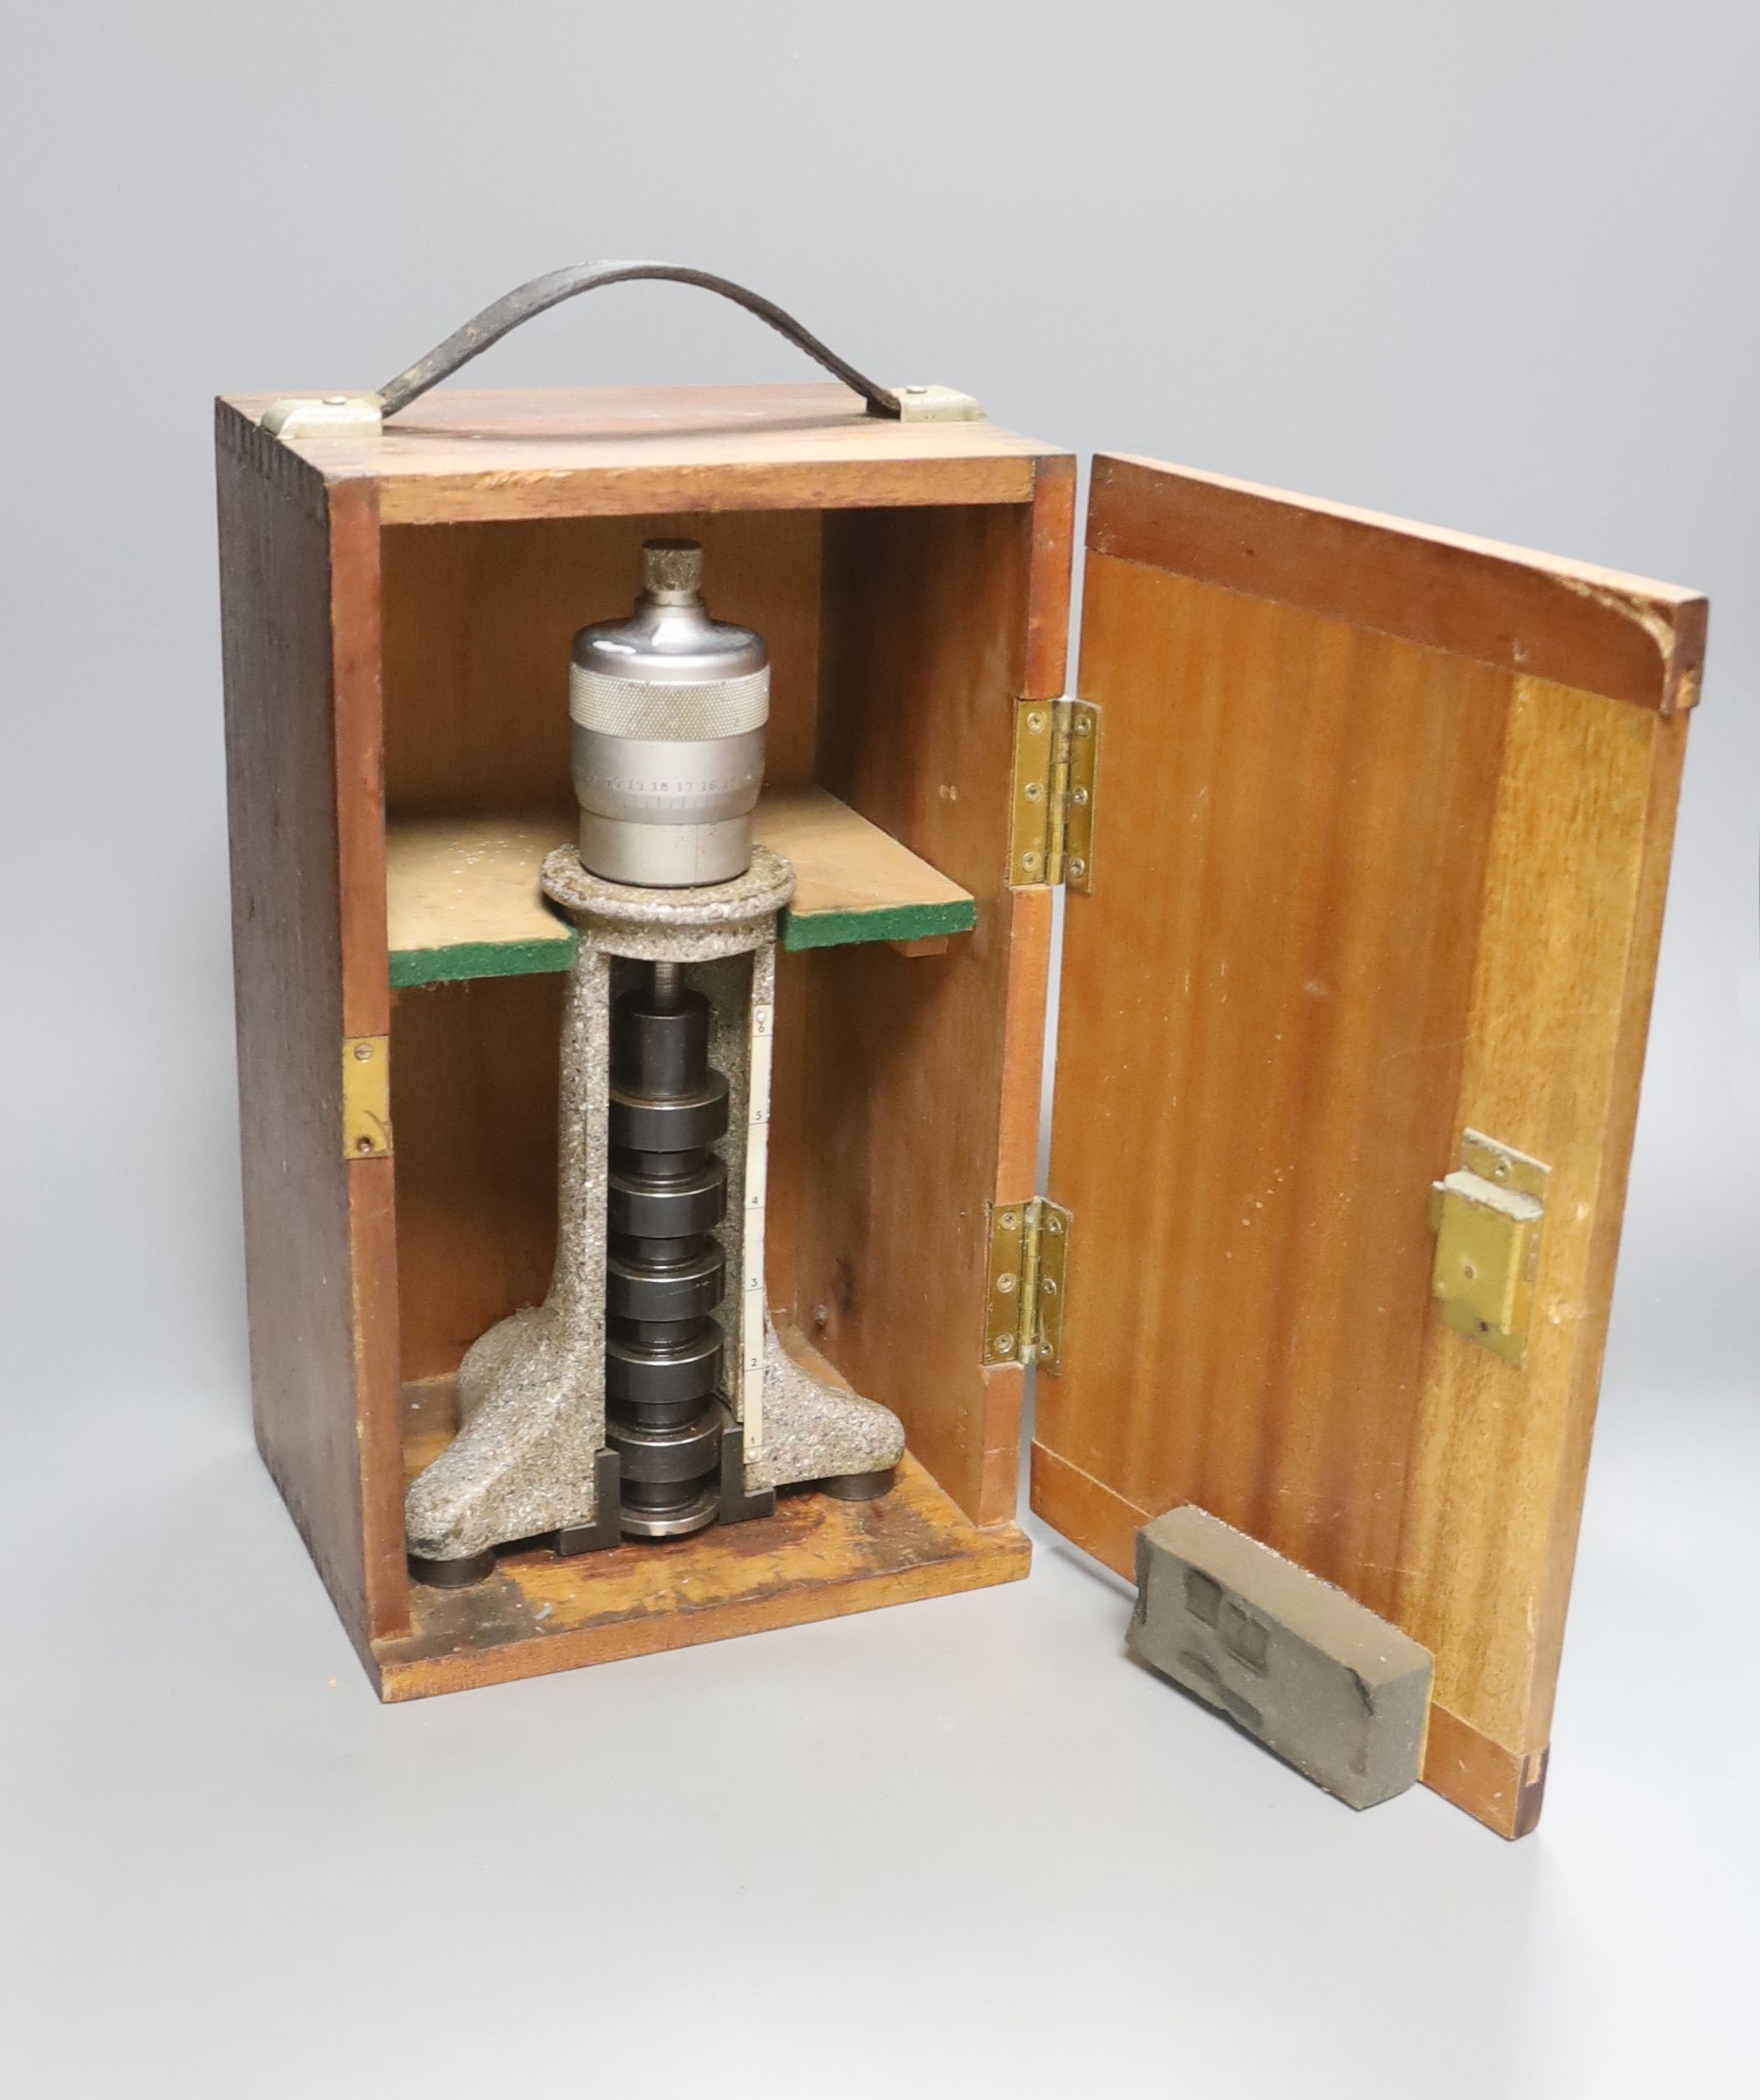 A Verdict height micrometer, cased